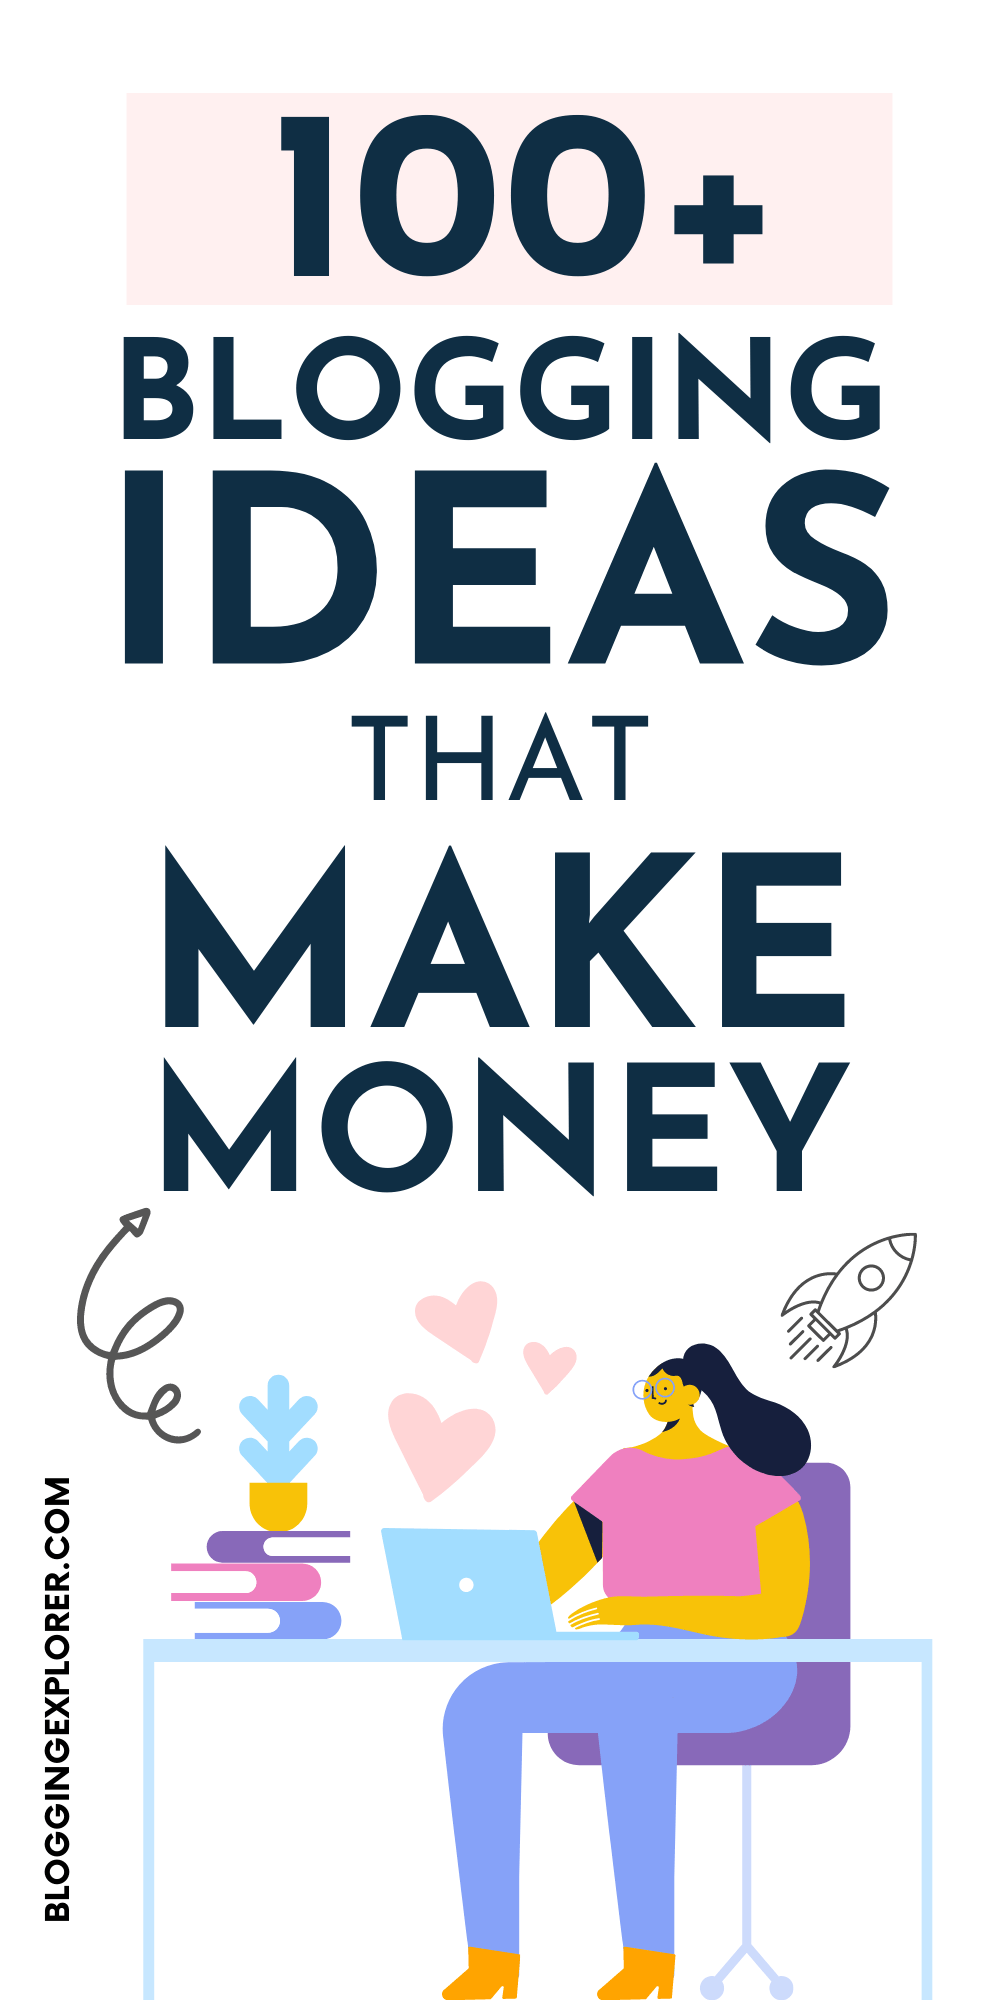 Blog topic ideas that make money